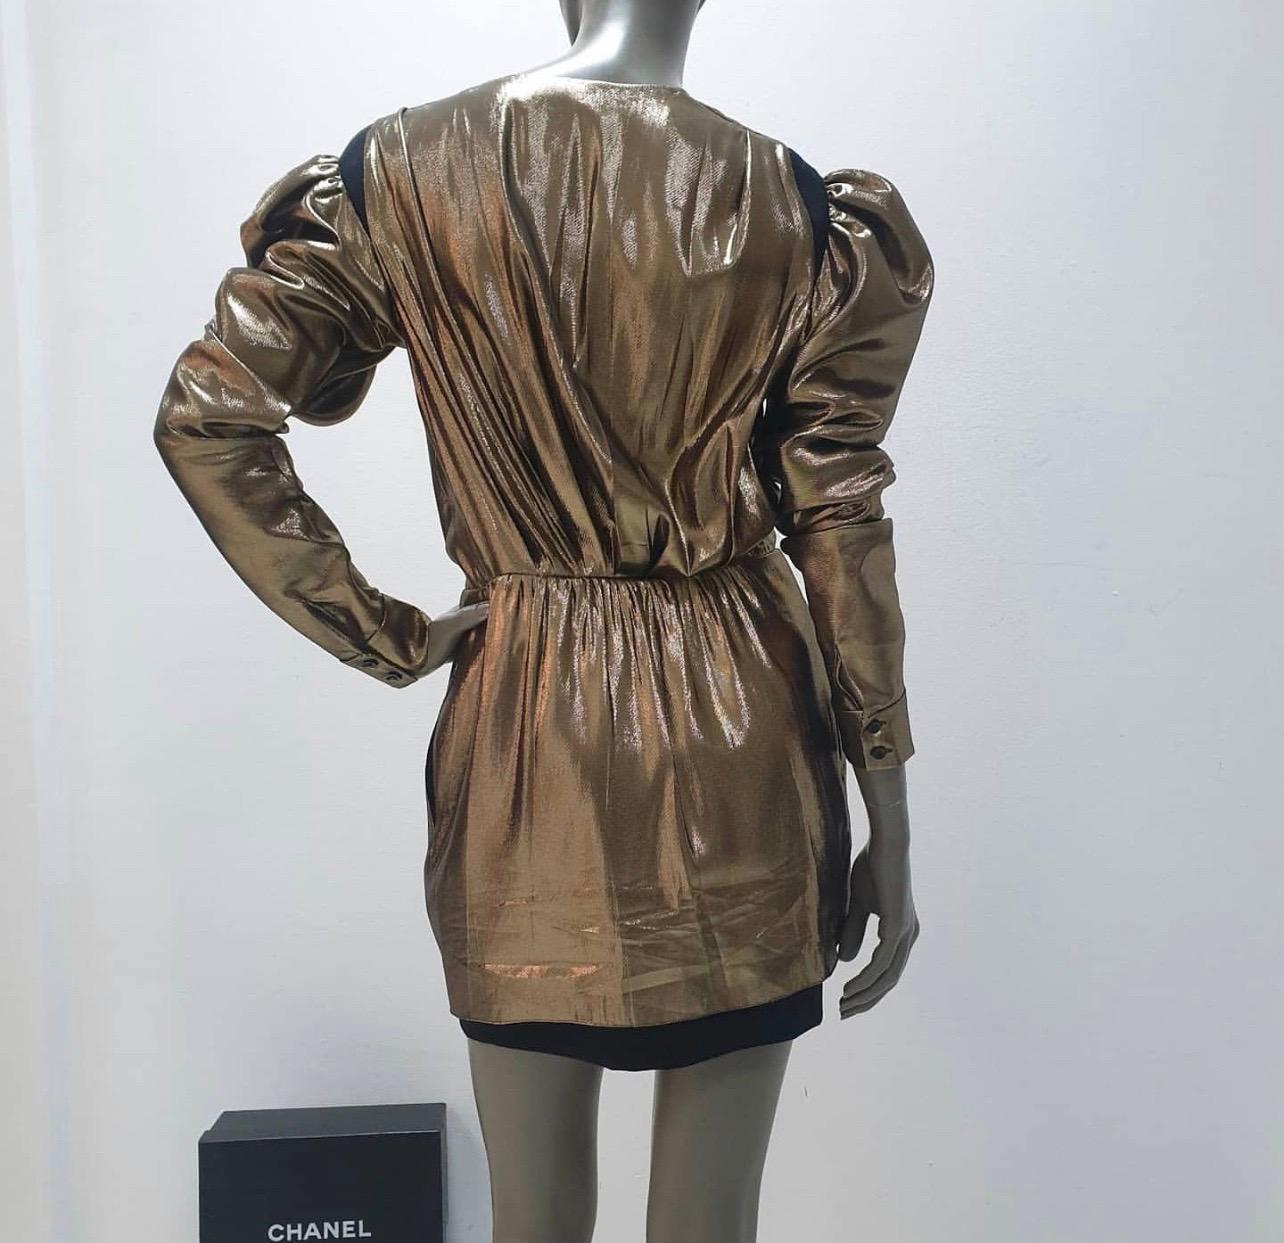 Saint Laurent Plunge Neck Gold Tunic Dress Dress  In Good Condition For Sale In Krakow, PL